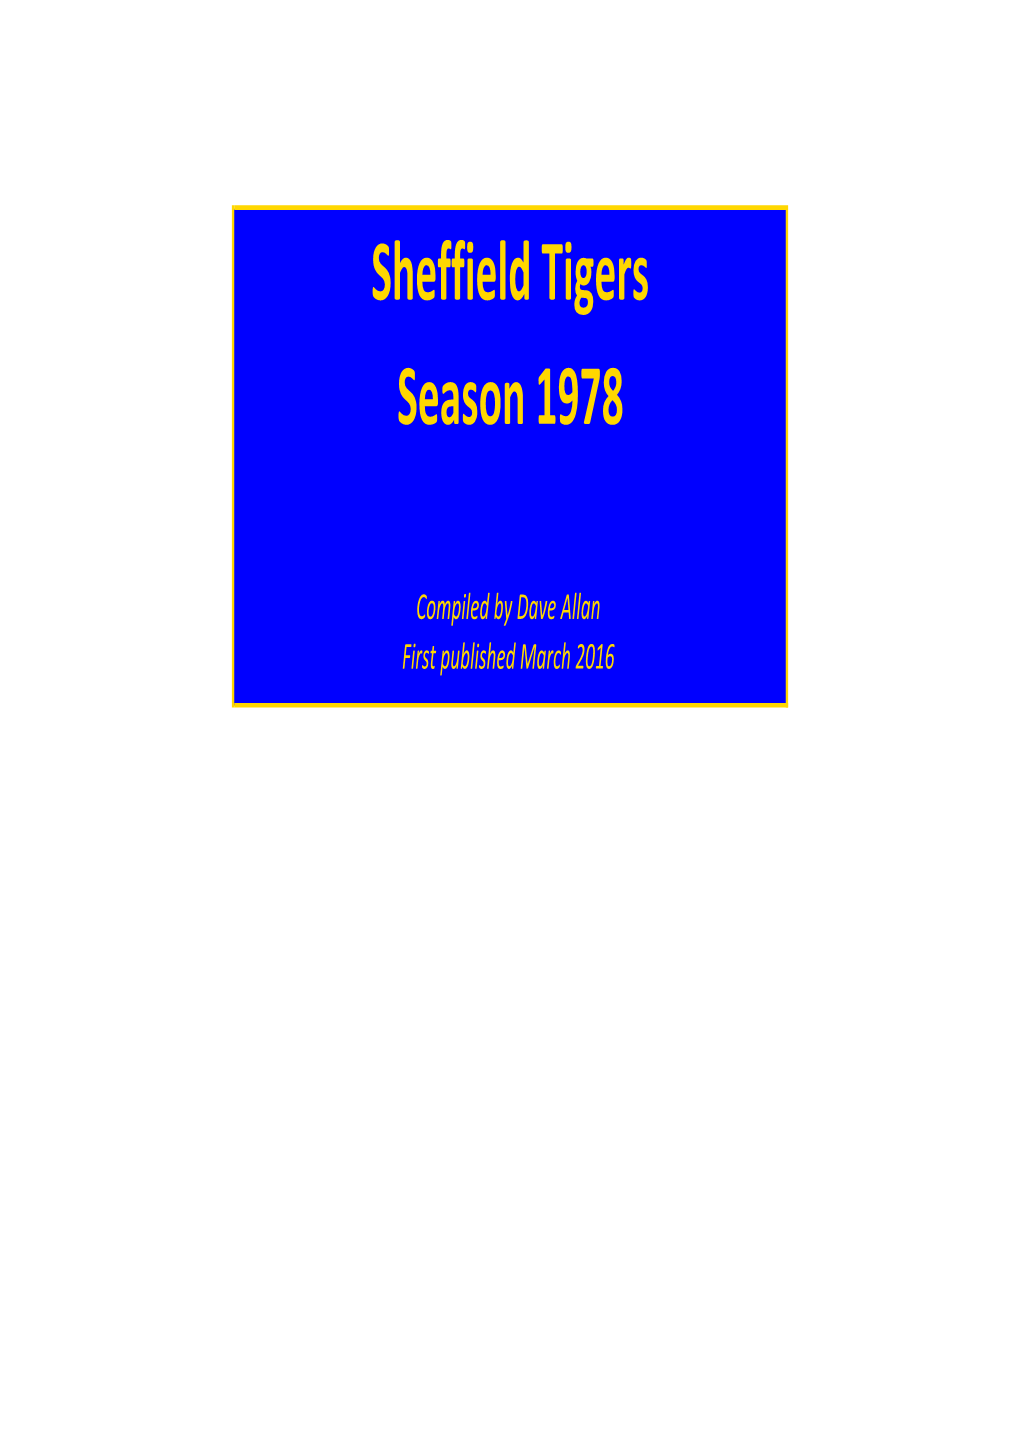 Sheffield Tigers Season 1978